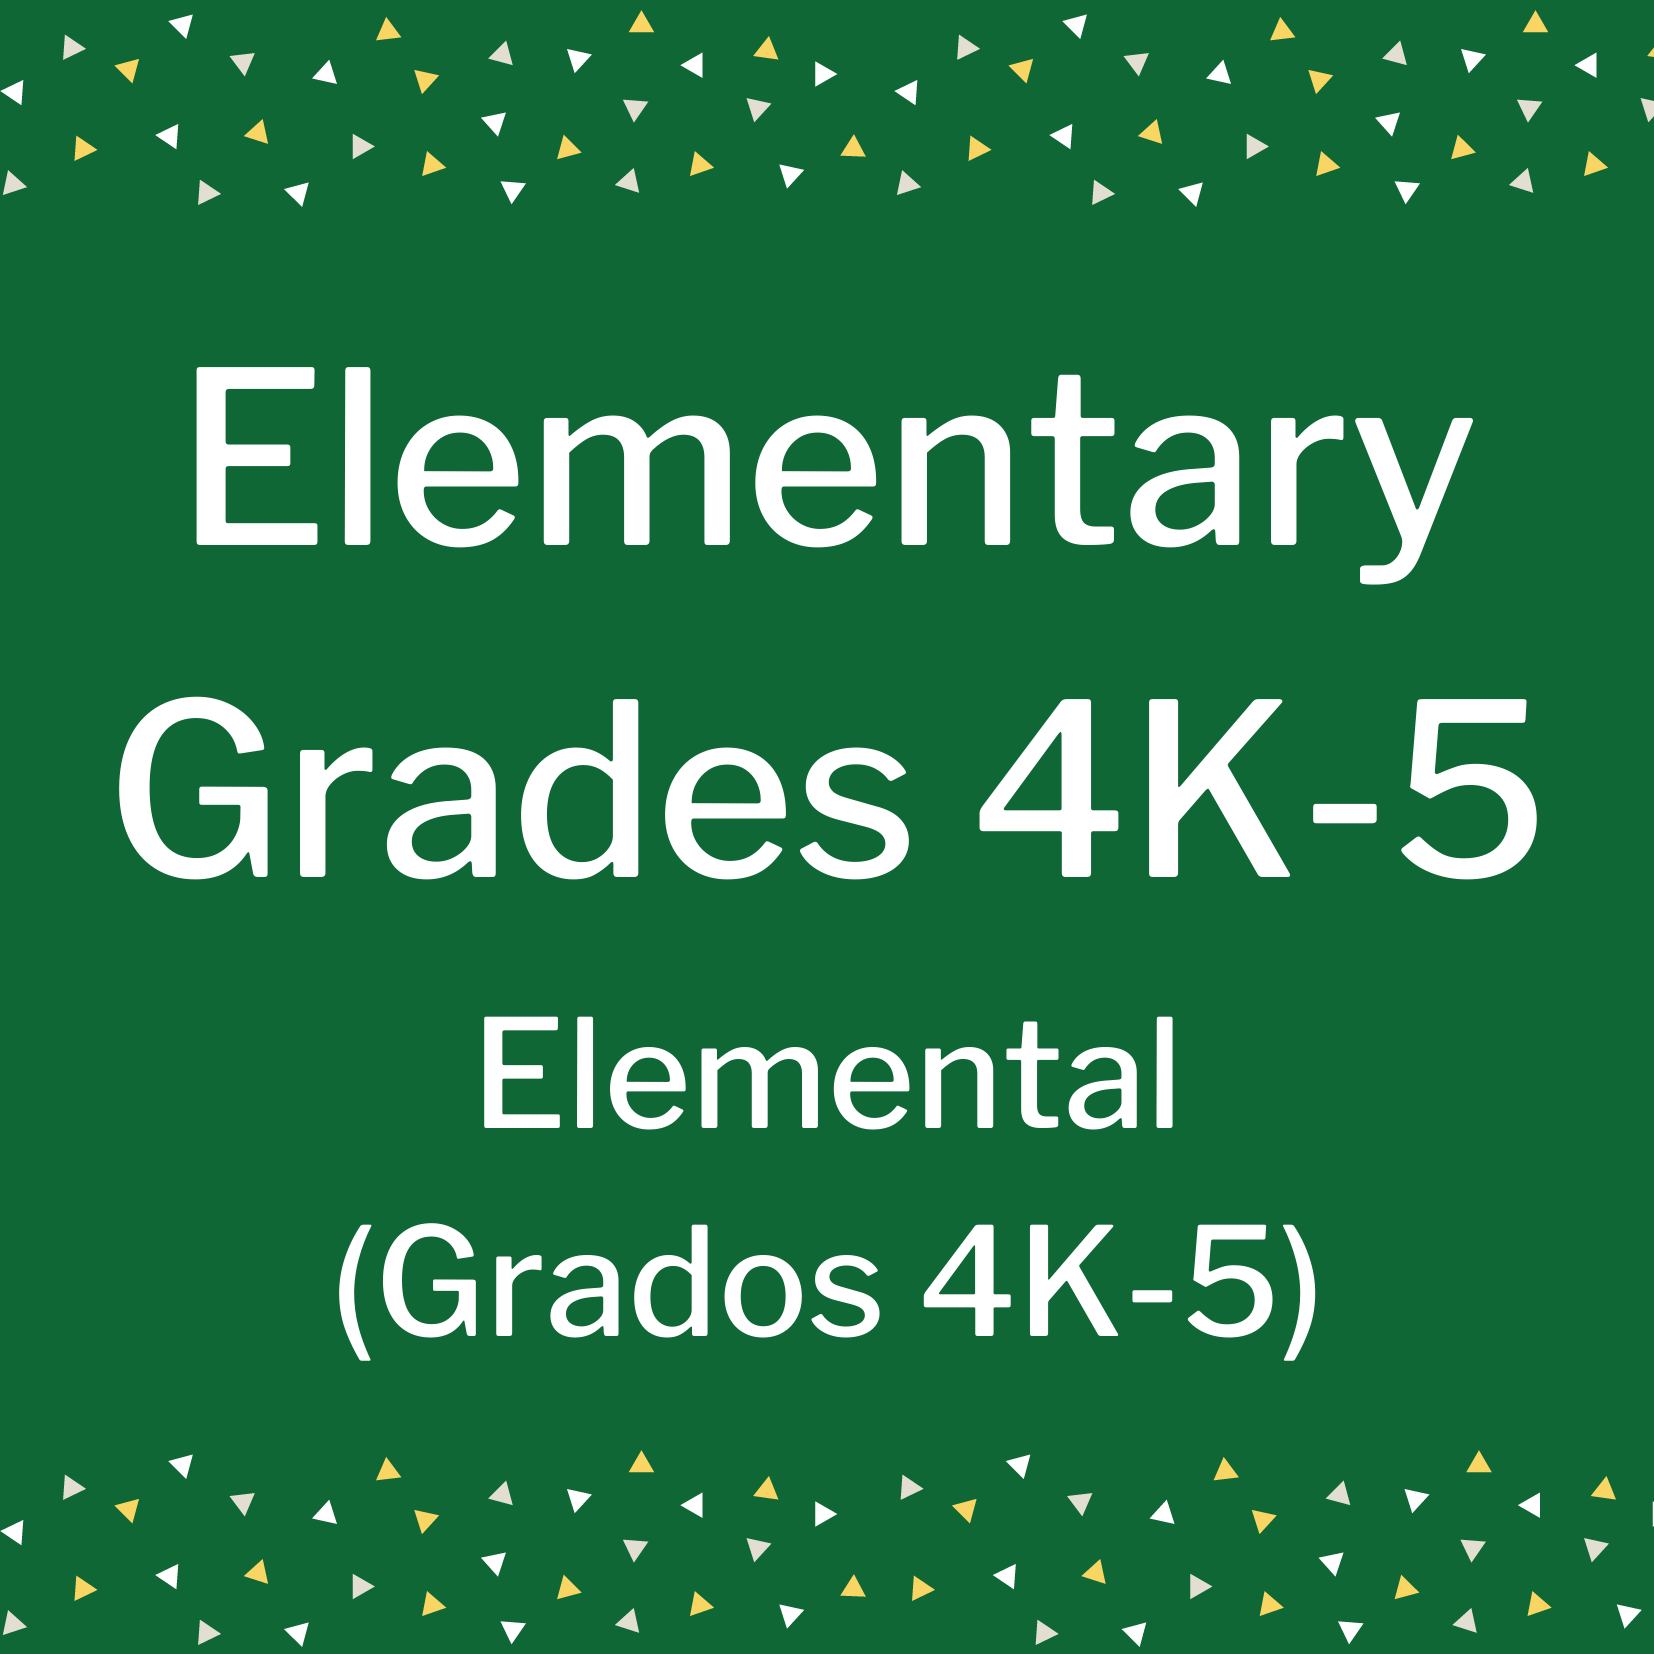 Elementary Grades 4K-5